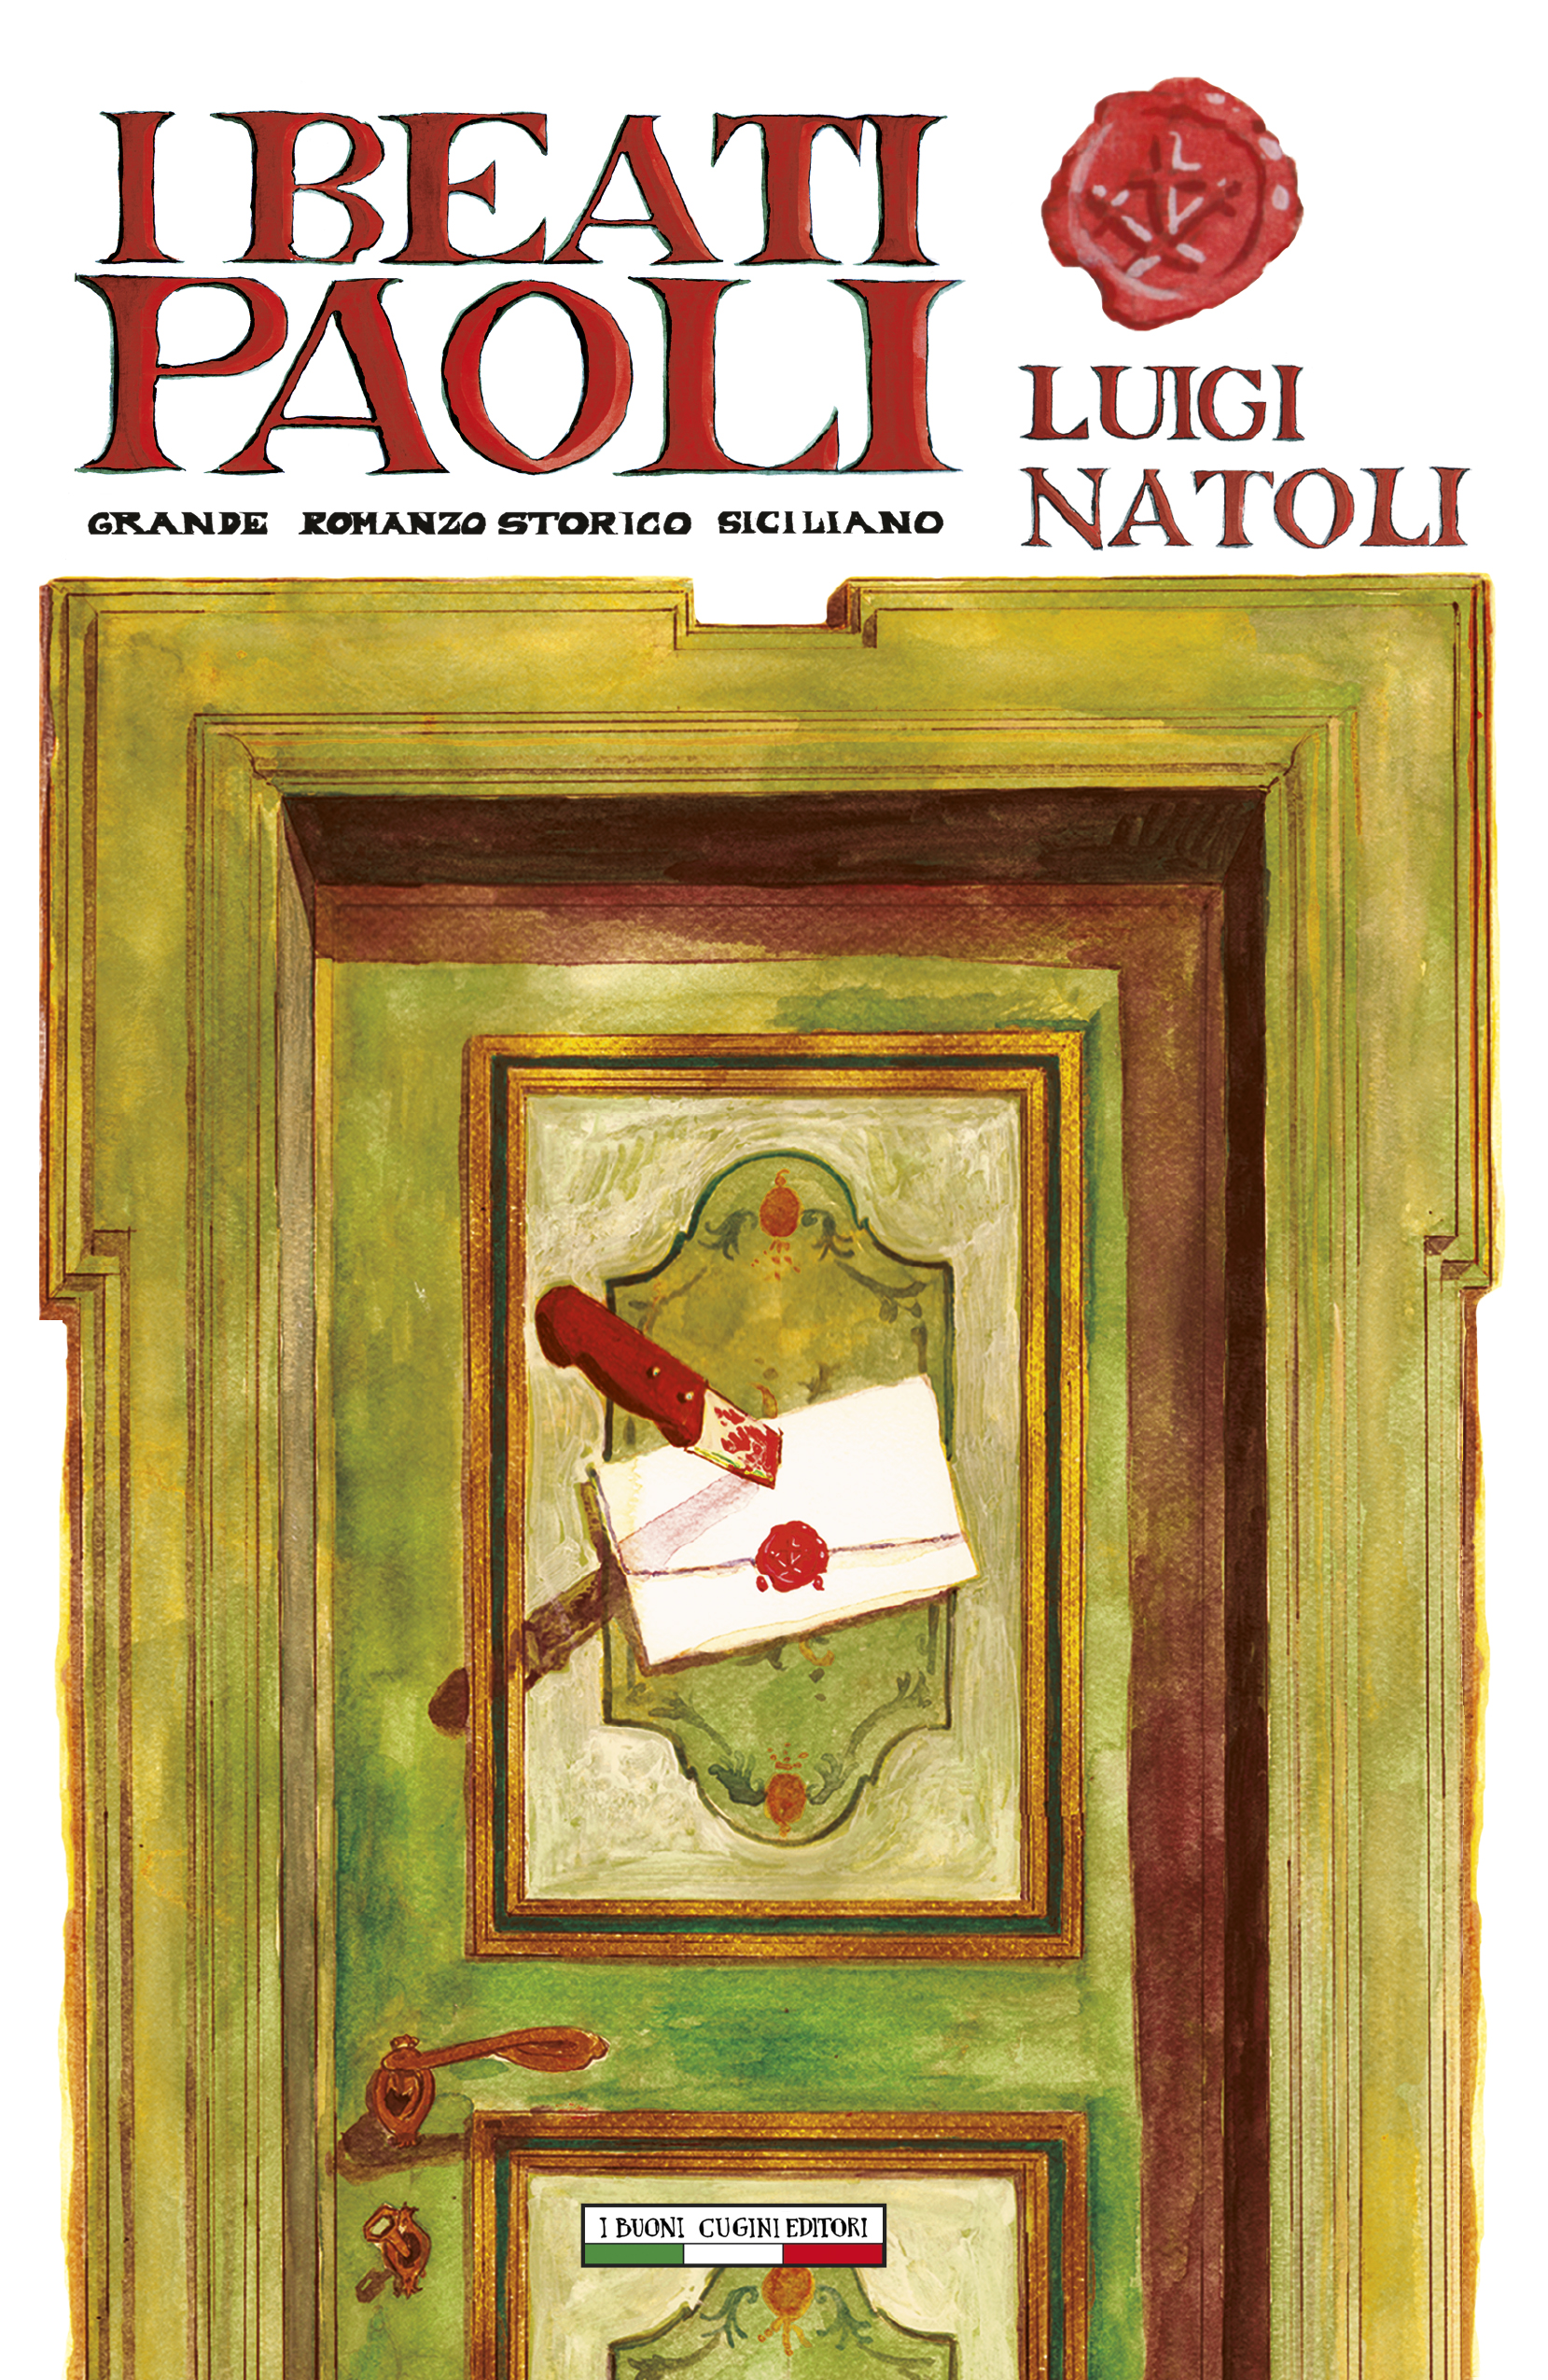 Luigi Natoli: I Beati Paoli